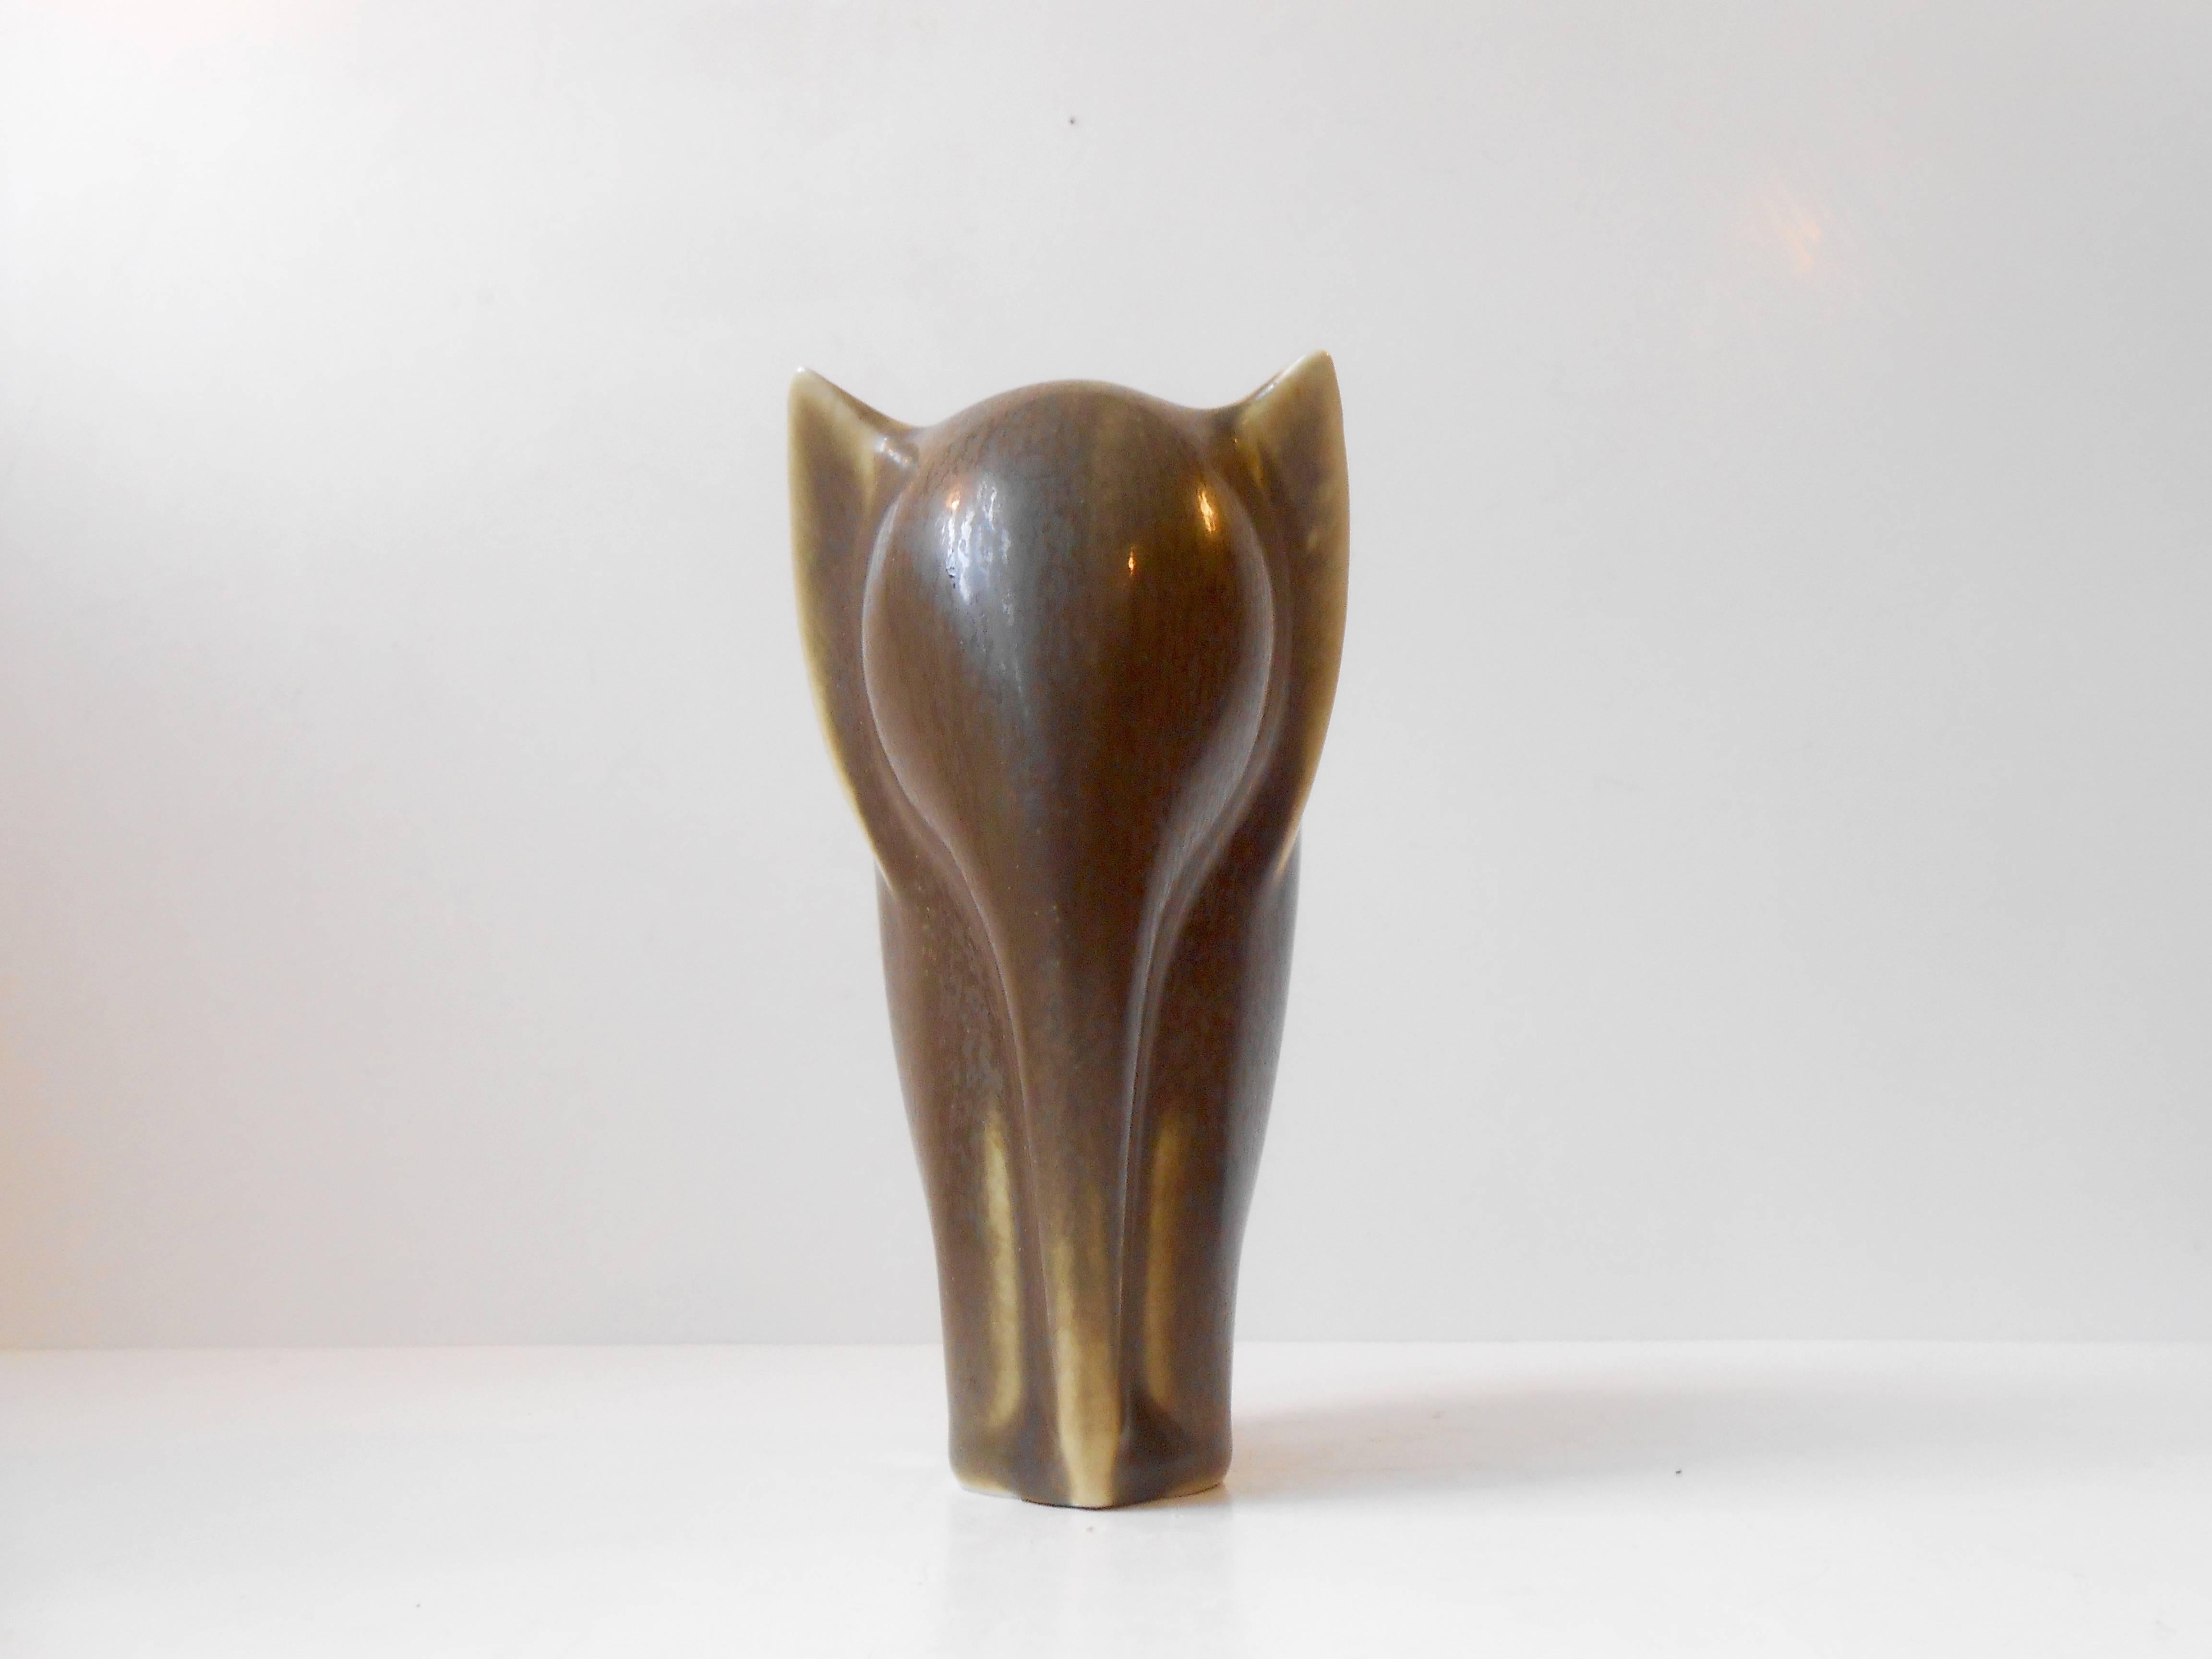 Ceramic elephant in brown/greenish Hares-fur glaze by Danish ceramist Kjeld Jordan for Palshus. Stamped: KJ - Palshus, Denmark. Measurements: H: 5 inches (12,5 cm). Condition: Mint.